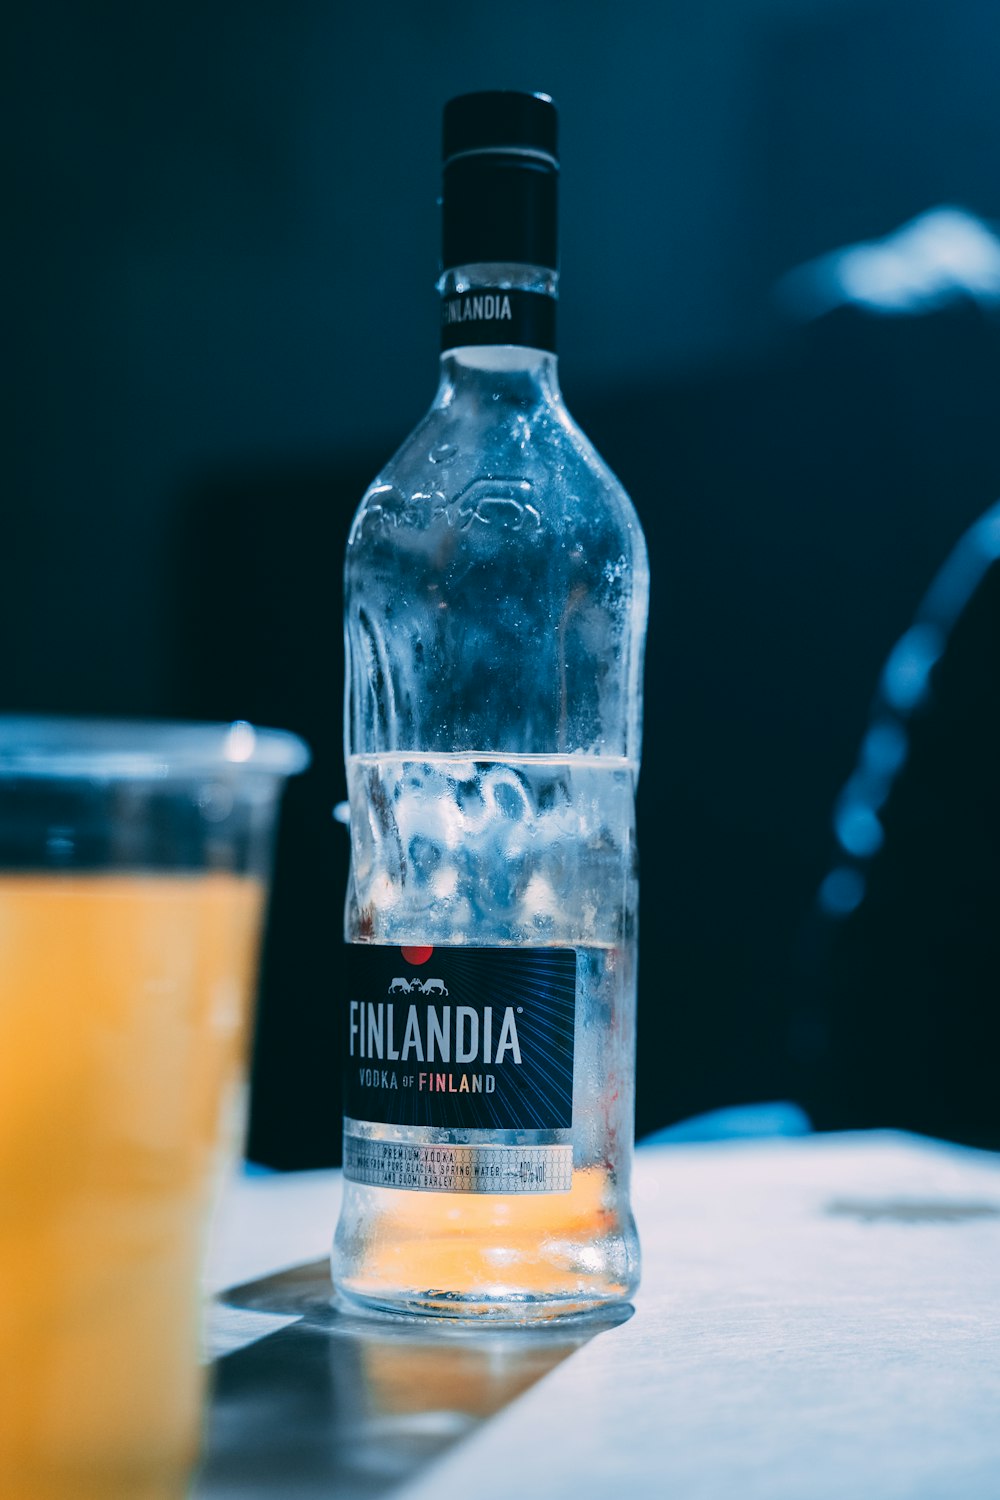 Finlandia bottle on white surface